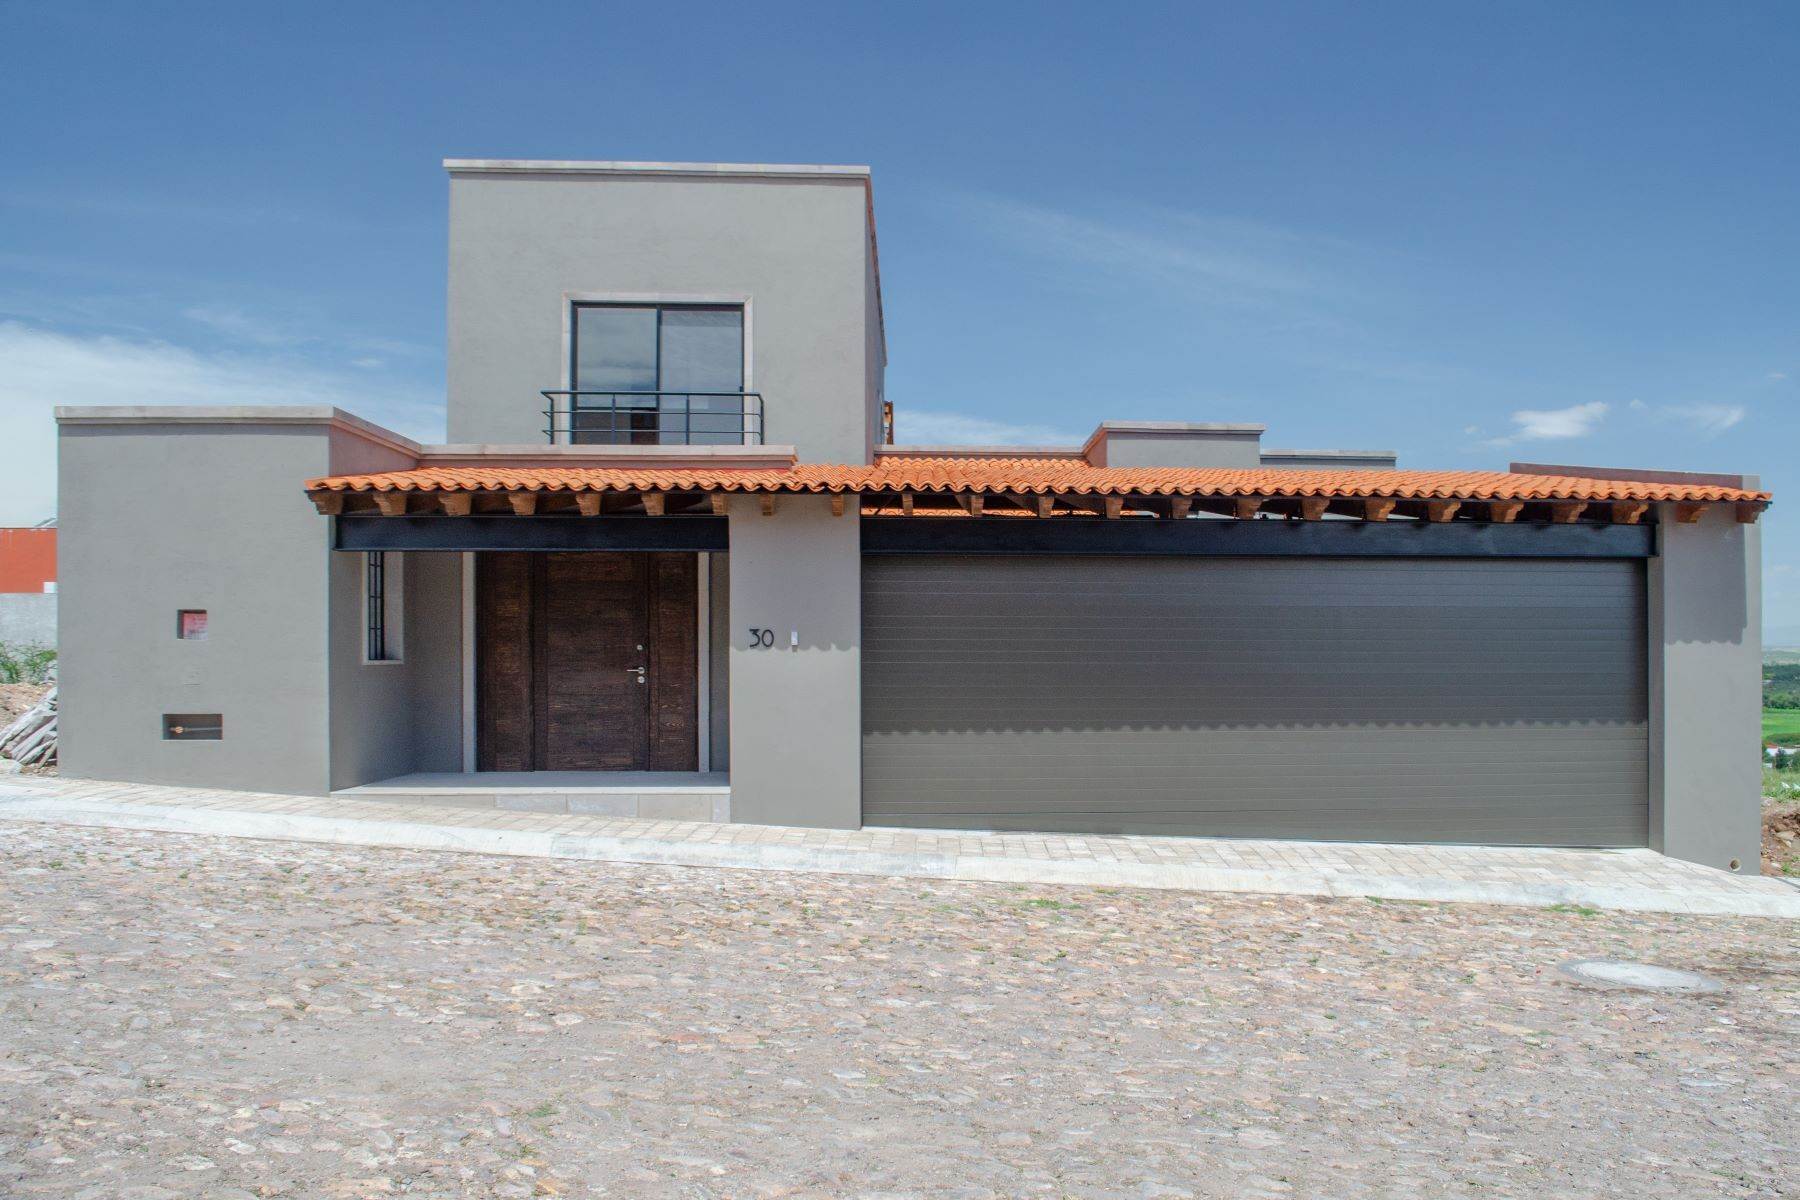 Property for Sale at Casa Malanquin Marbella 30 San Miguel De Allende, Guanajuato 37797 Mexico